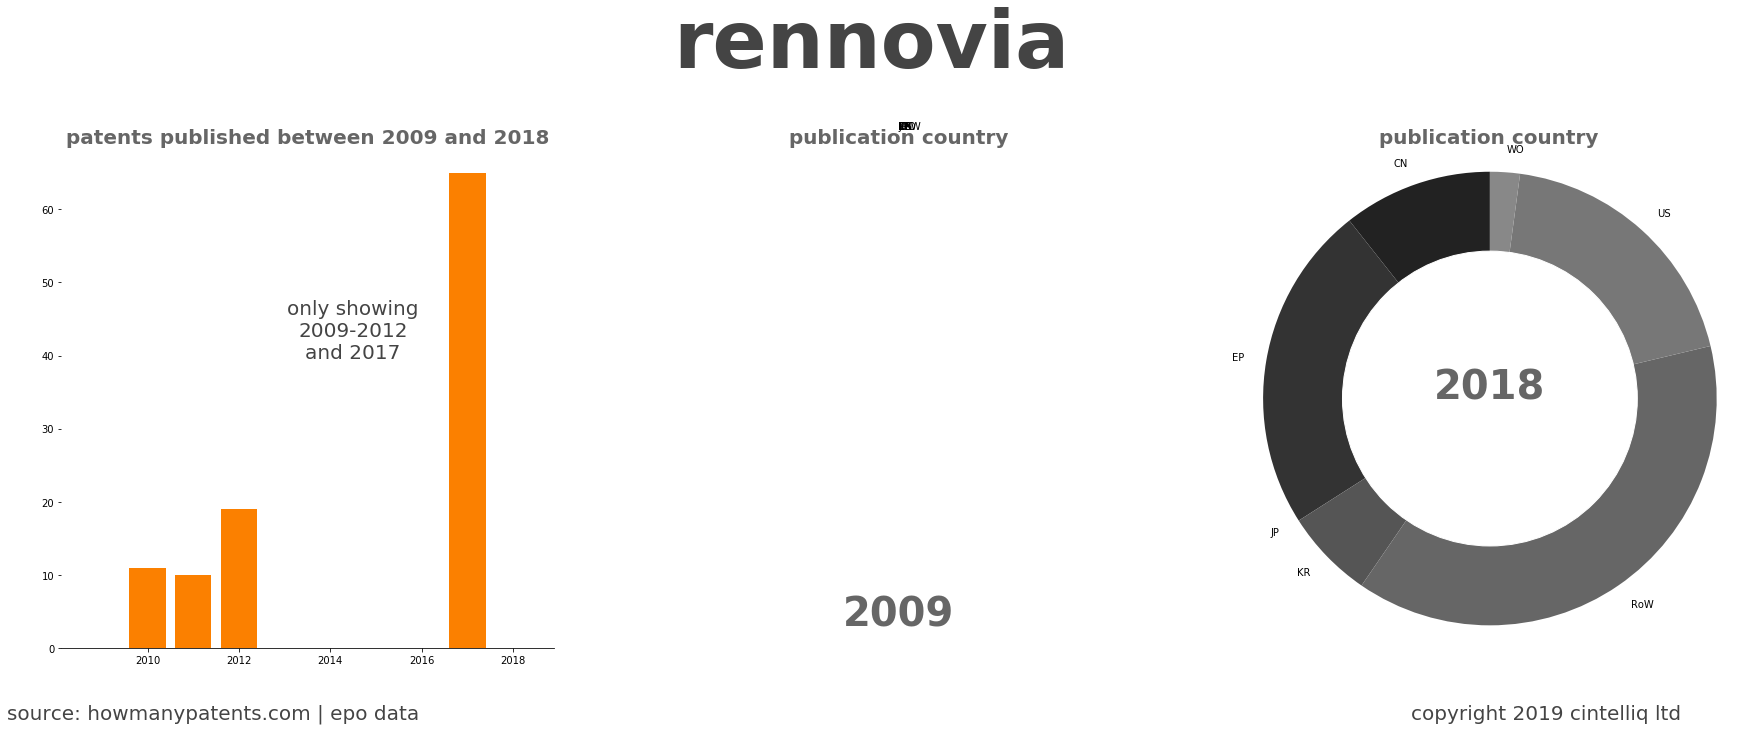 summary of patents for Rennovia